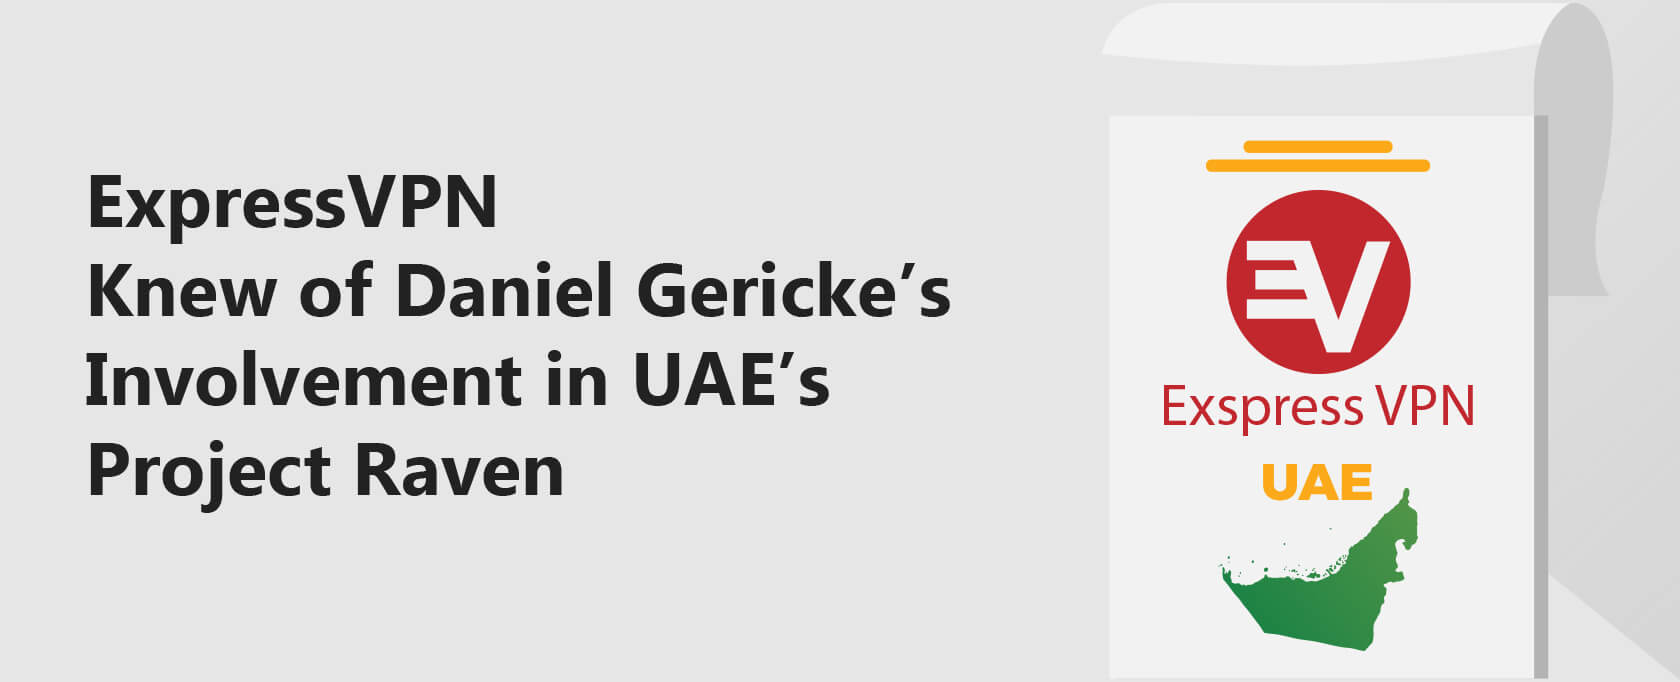 ExpressVPN Knew of Daniel Gericke's Involvement in UAE's Project Raven